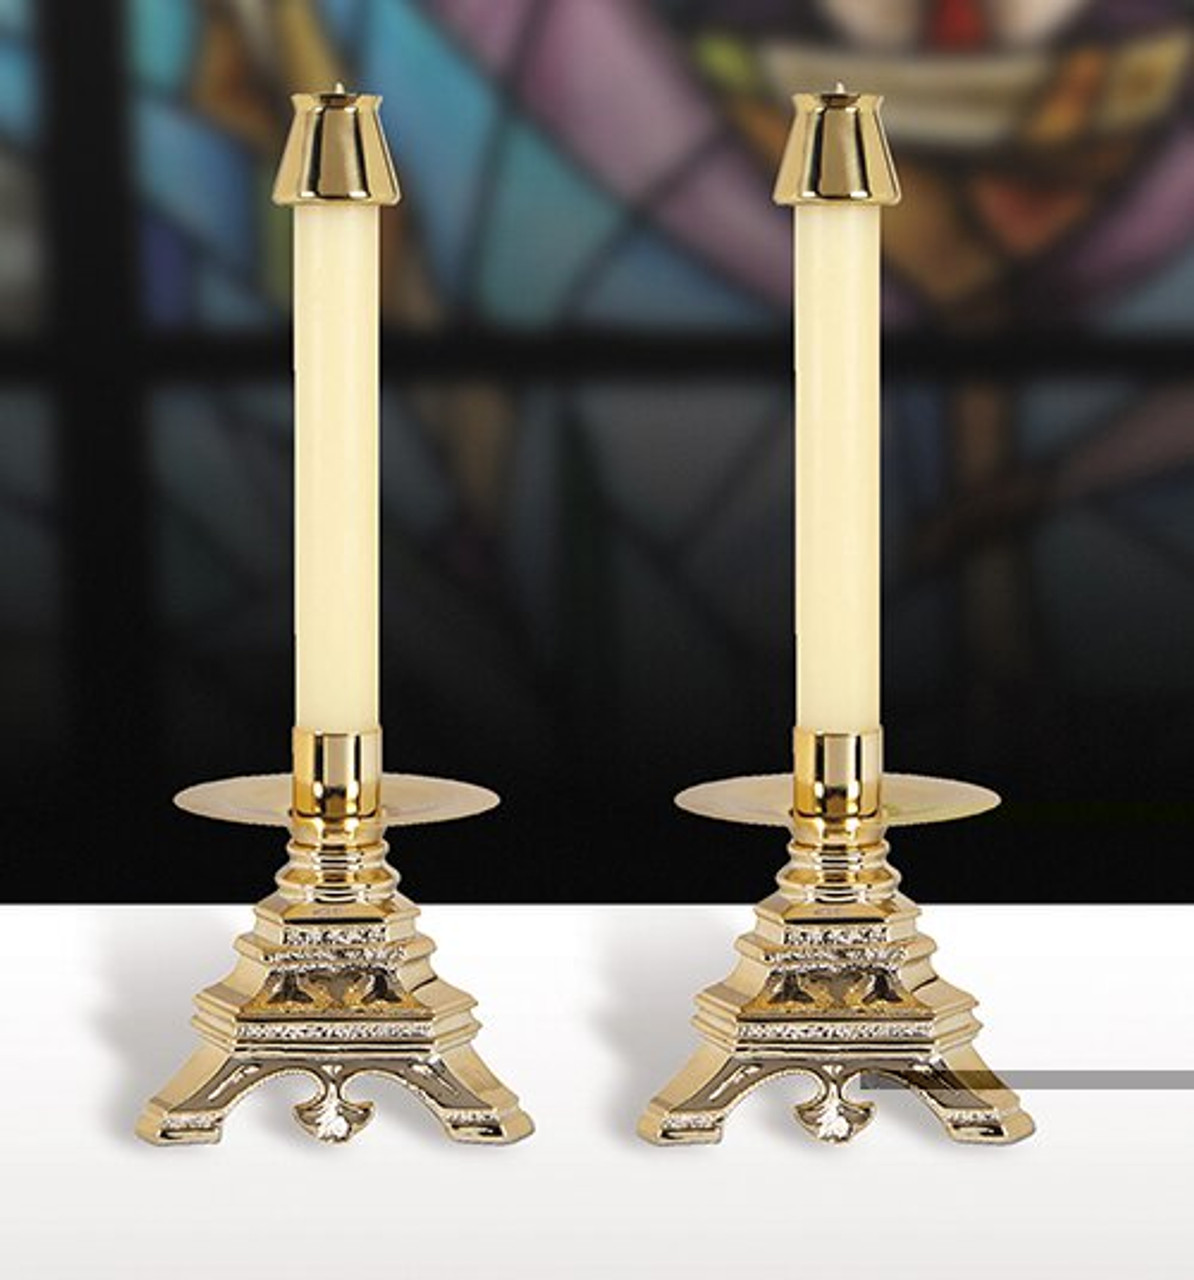 Chapel Altar Candlestick